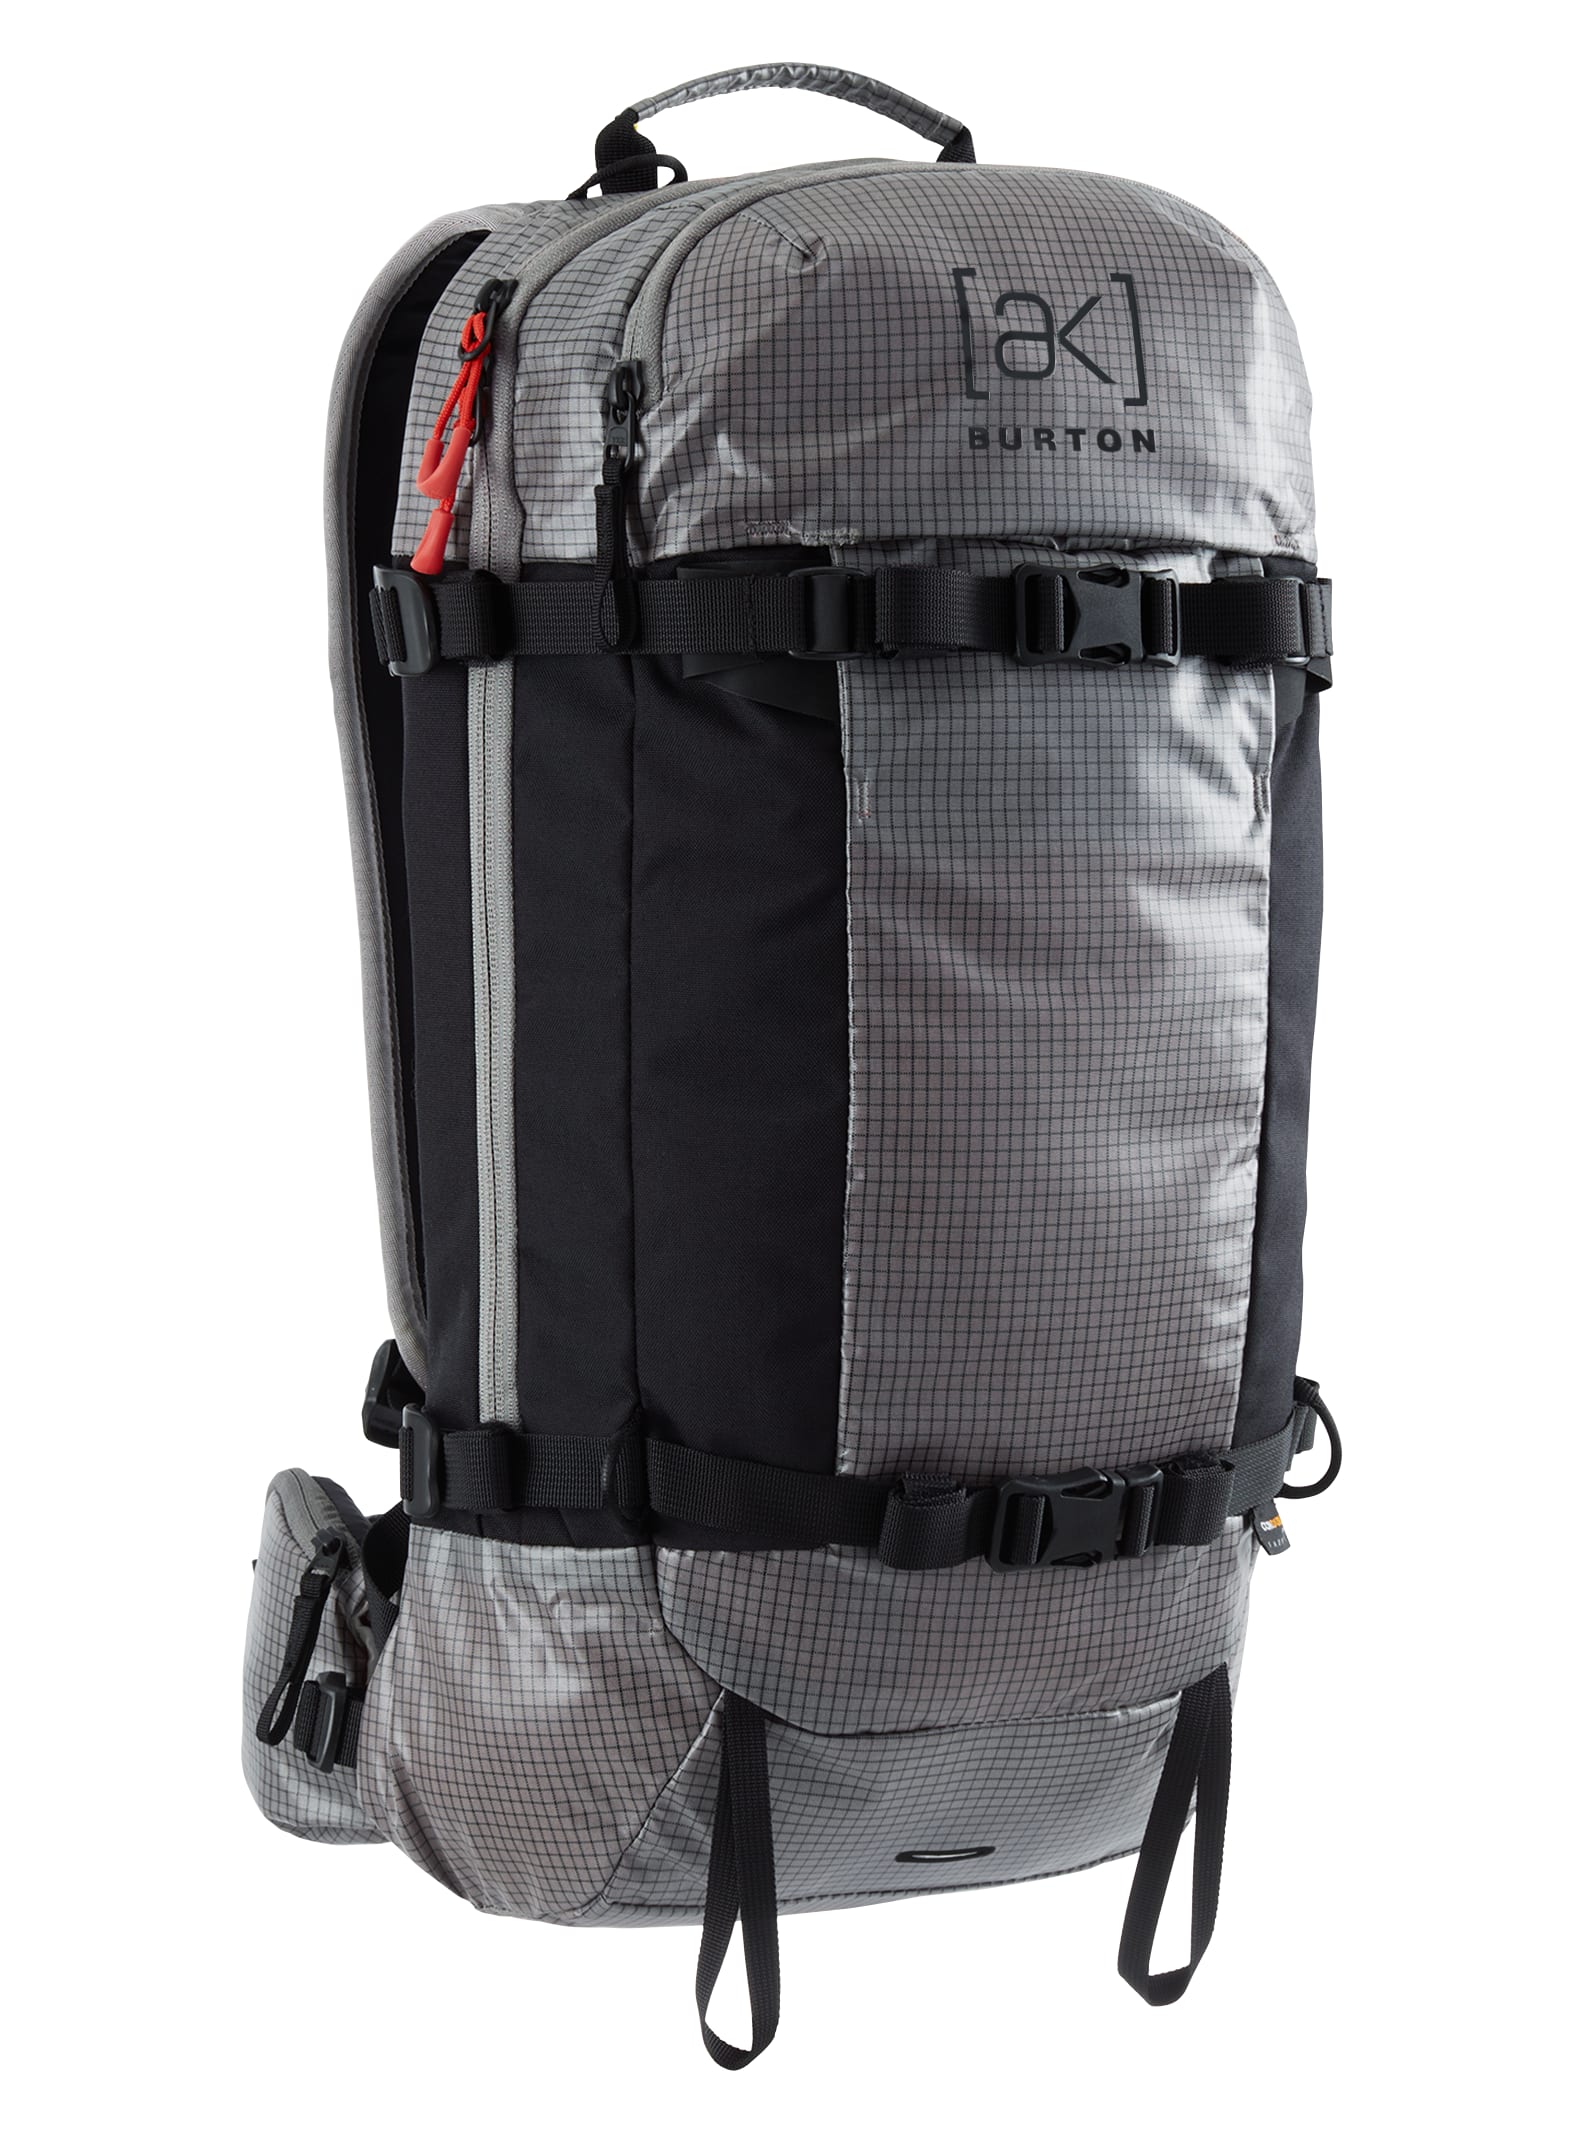 ak] Dispatcher 18L Backpack | Burton.com Winter 2023 ES